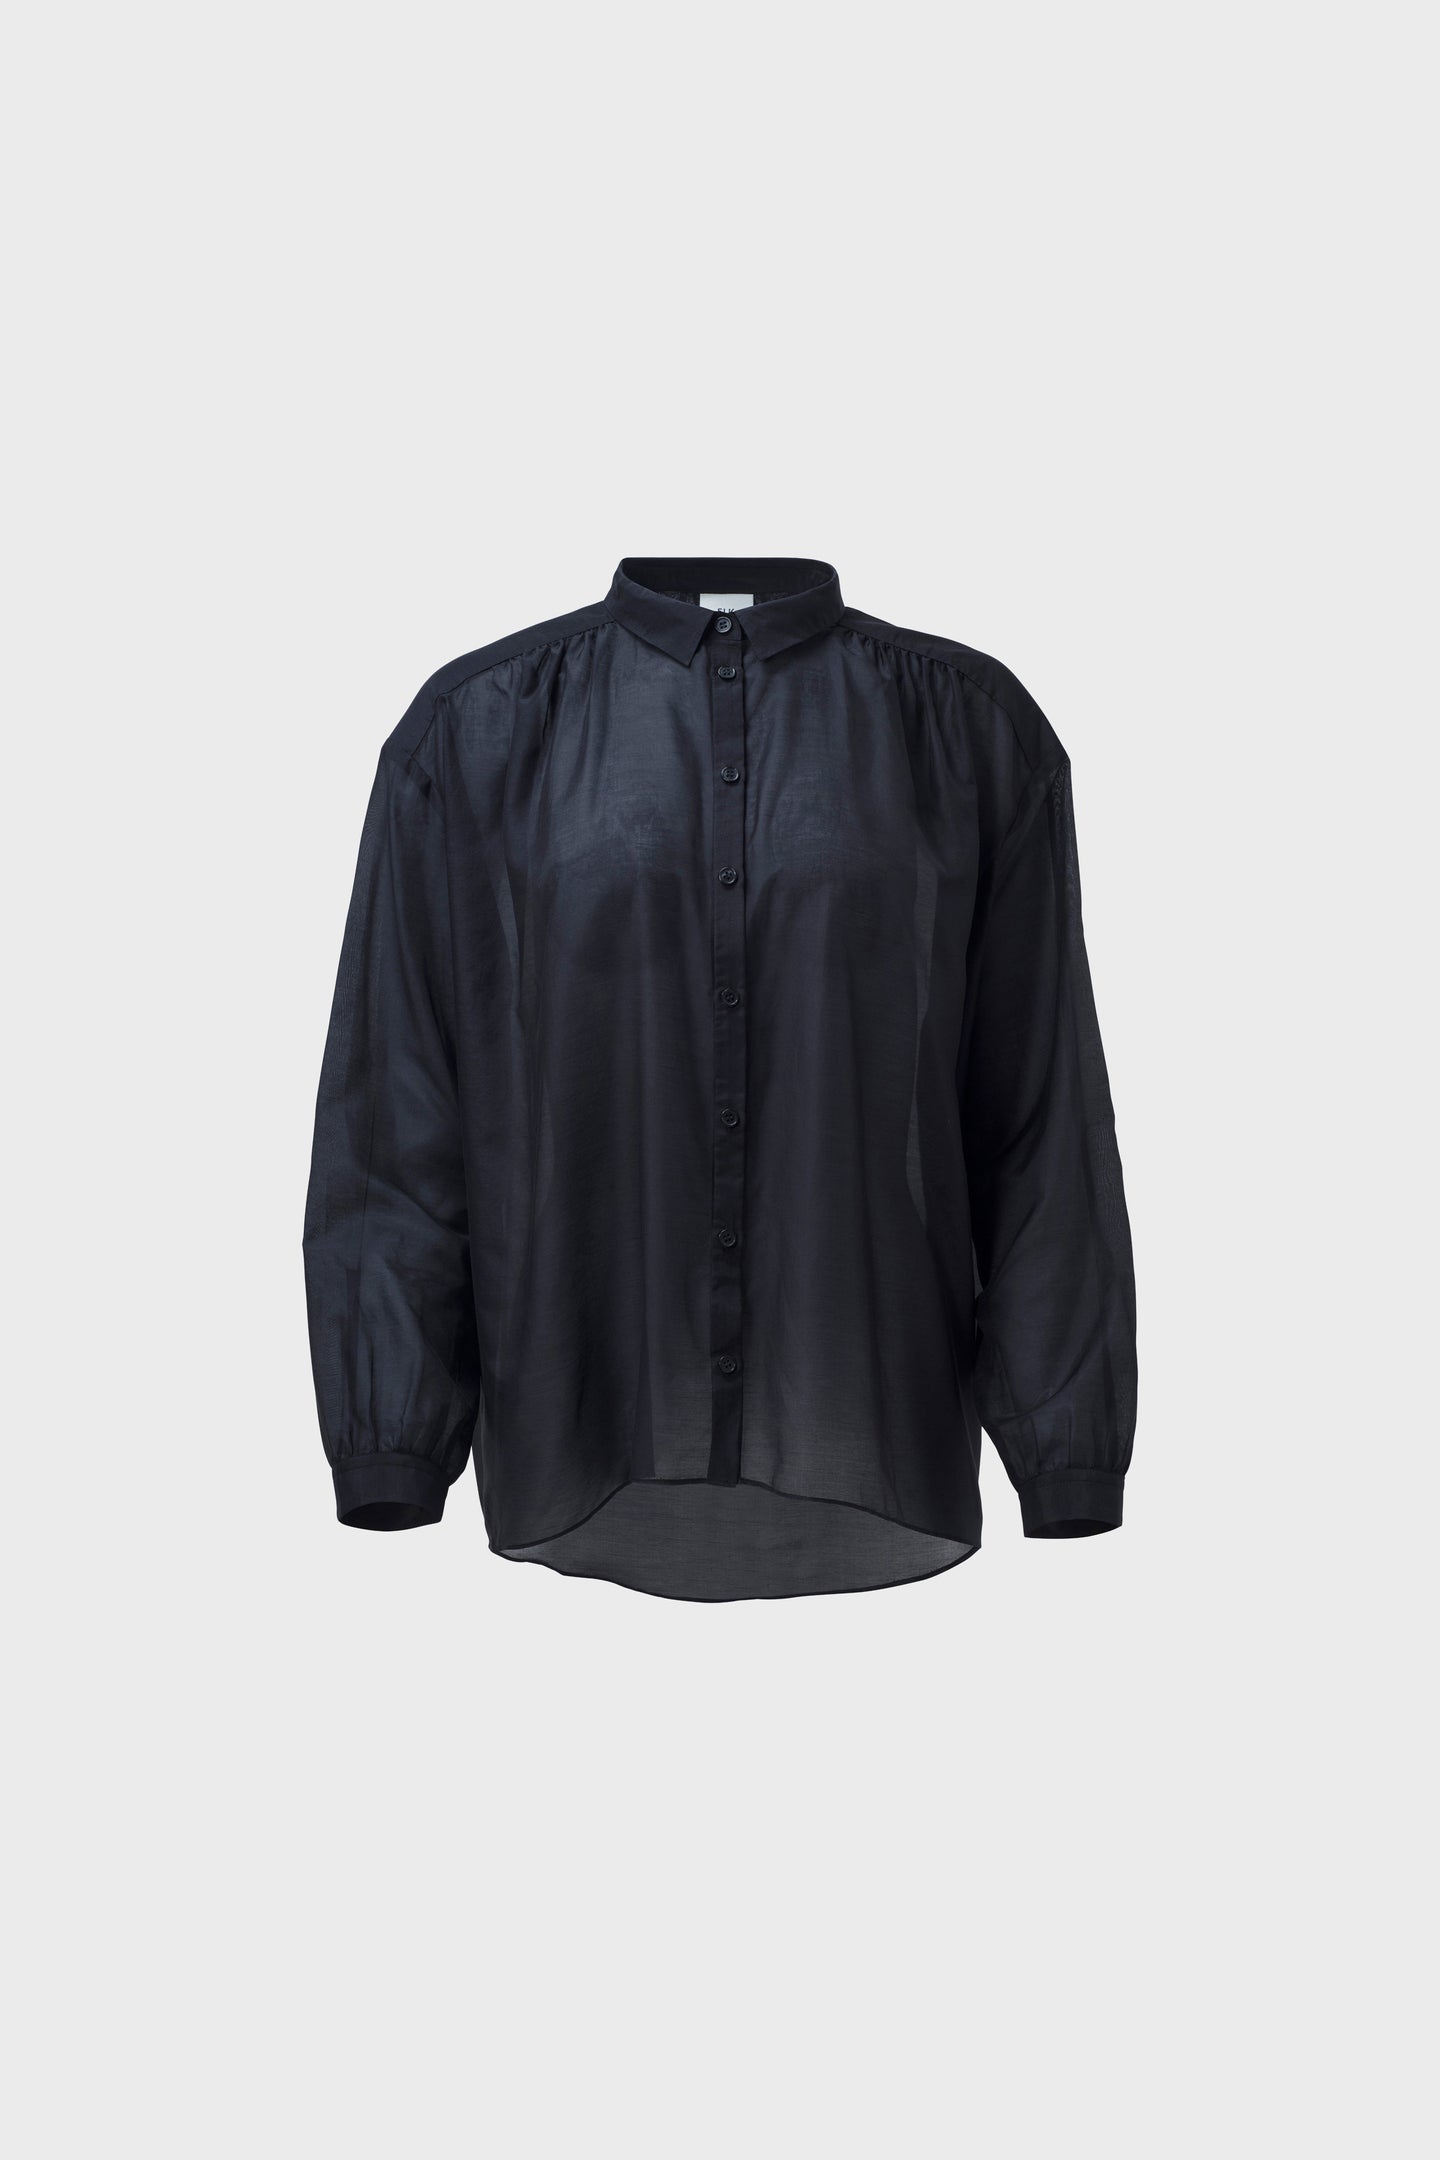 Liah Shirt | Black